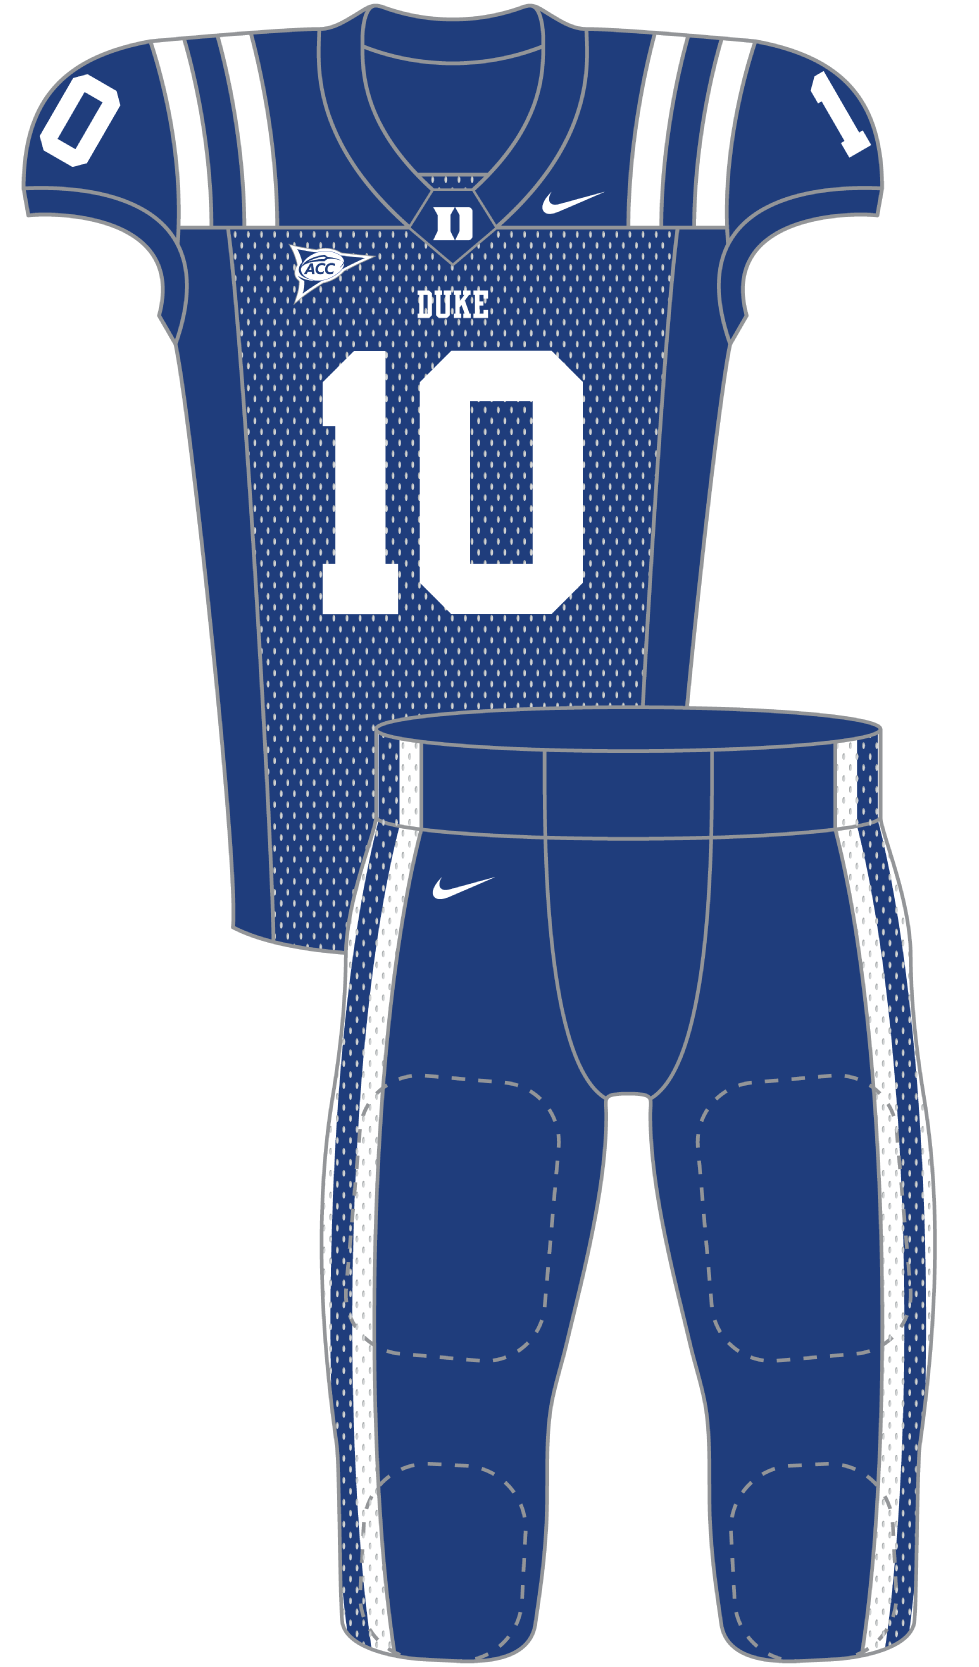 Duke 2010 Blue Uniform